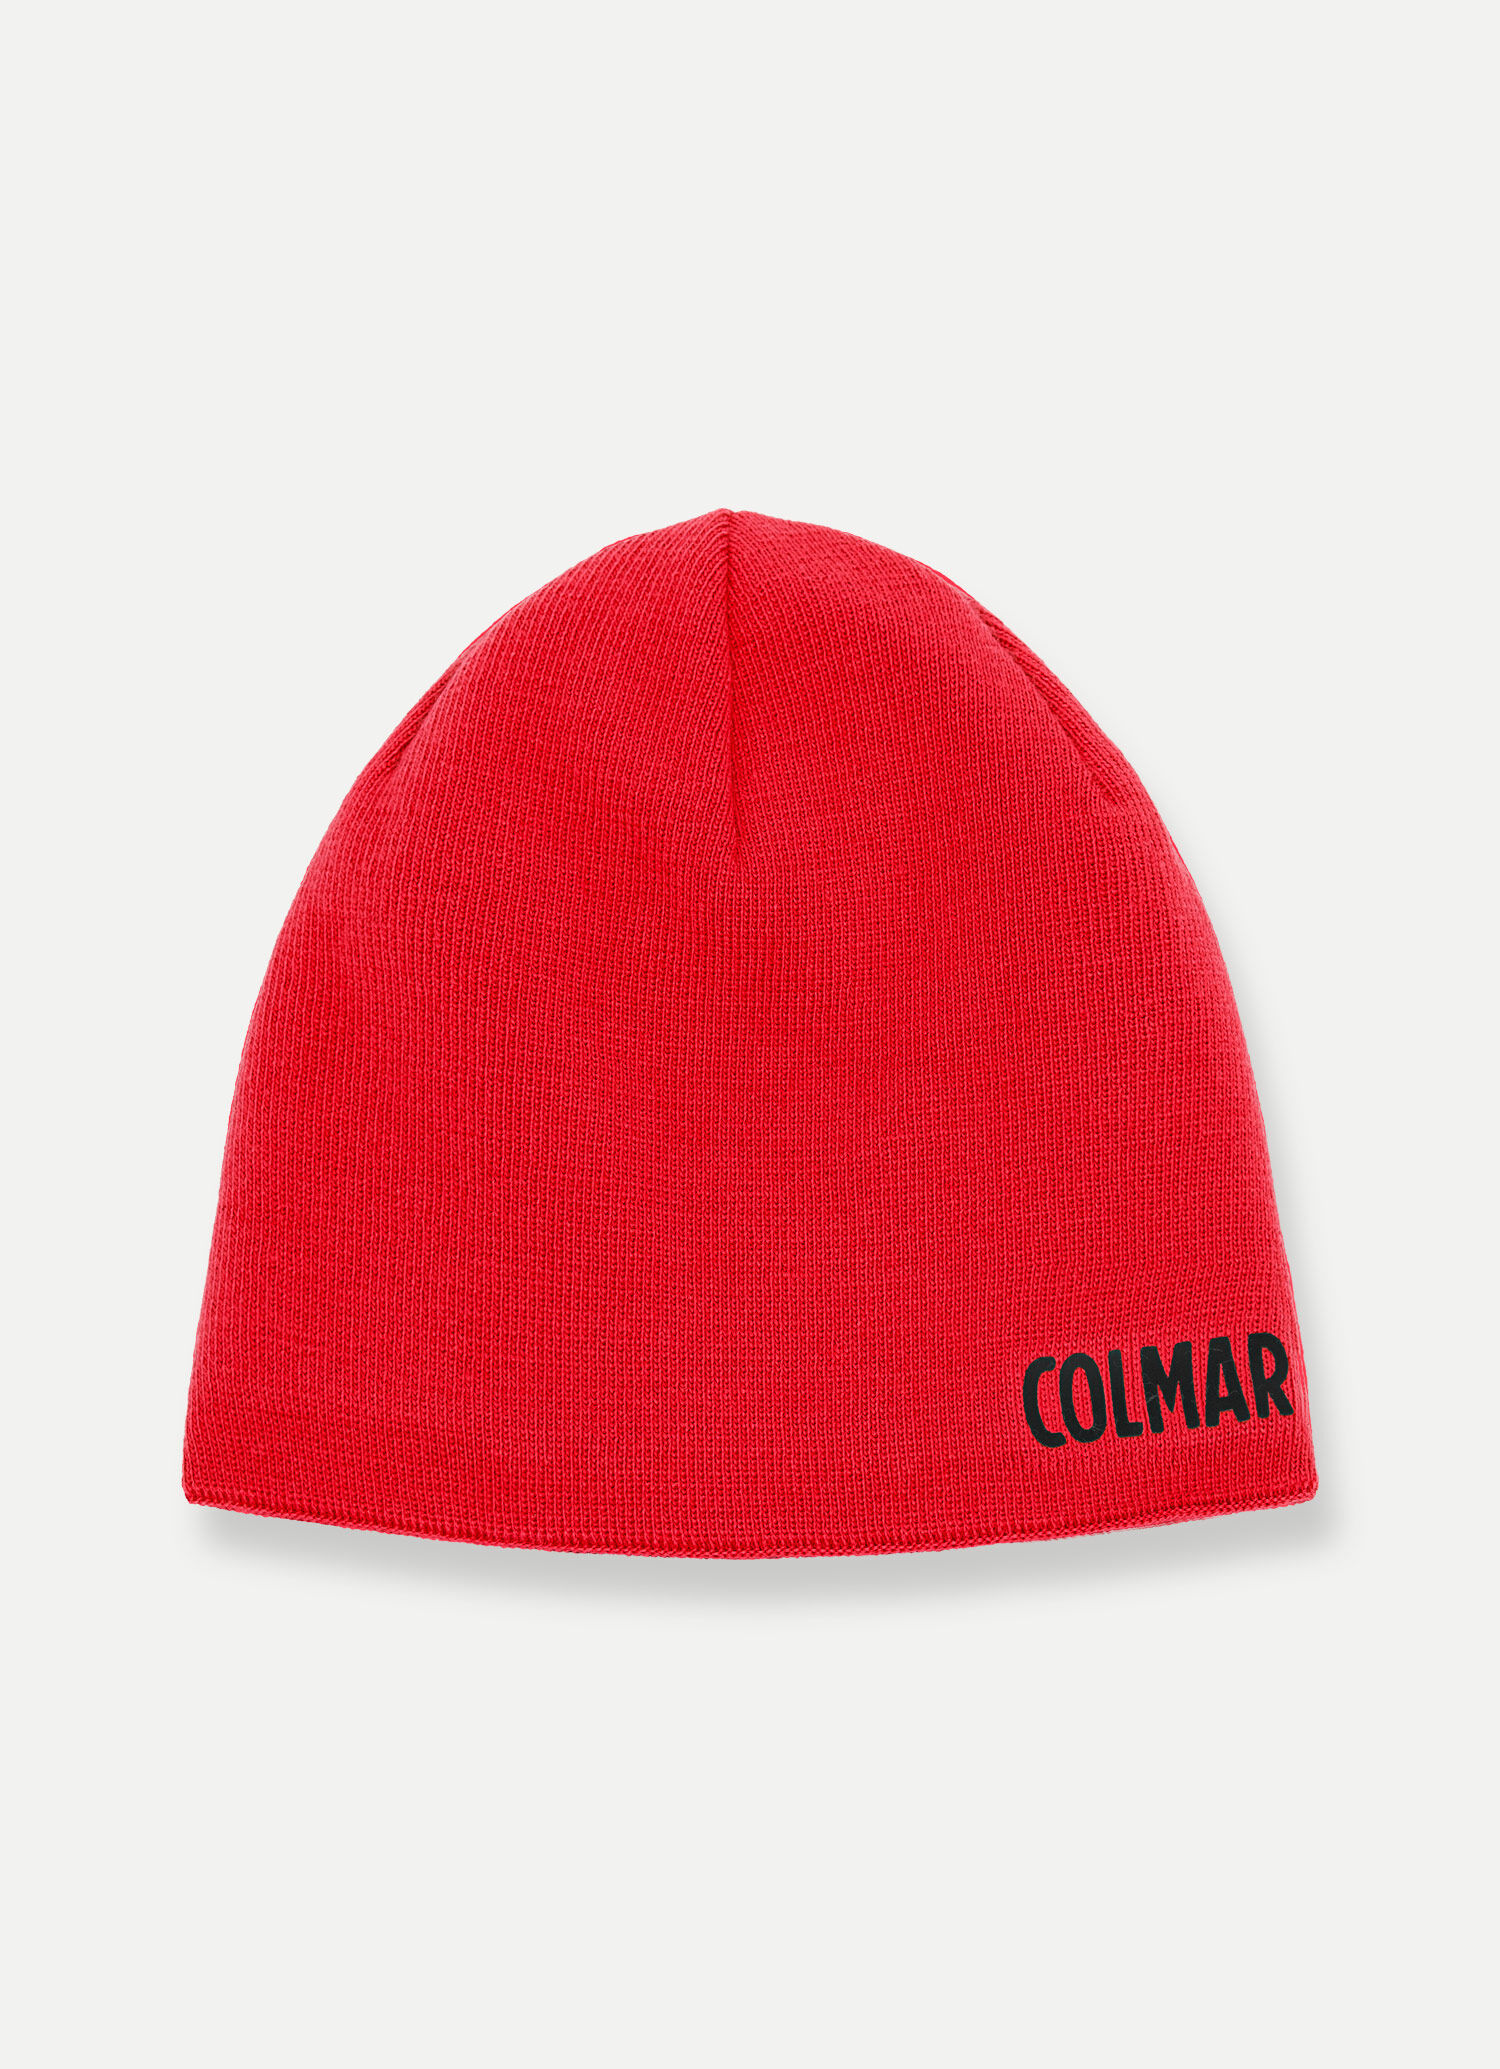 Colmar Hat - Pipo